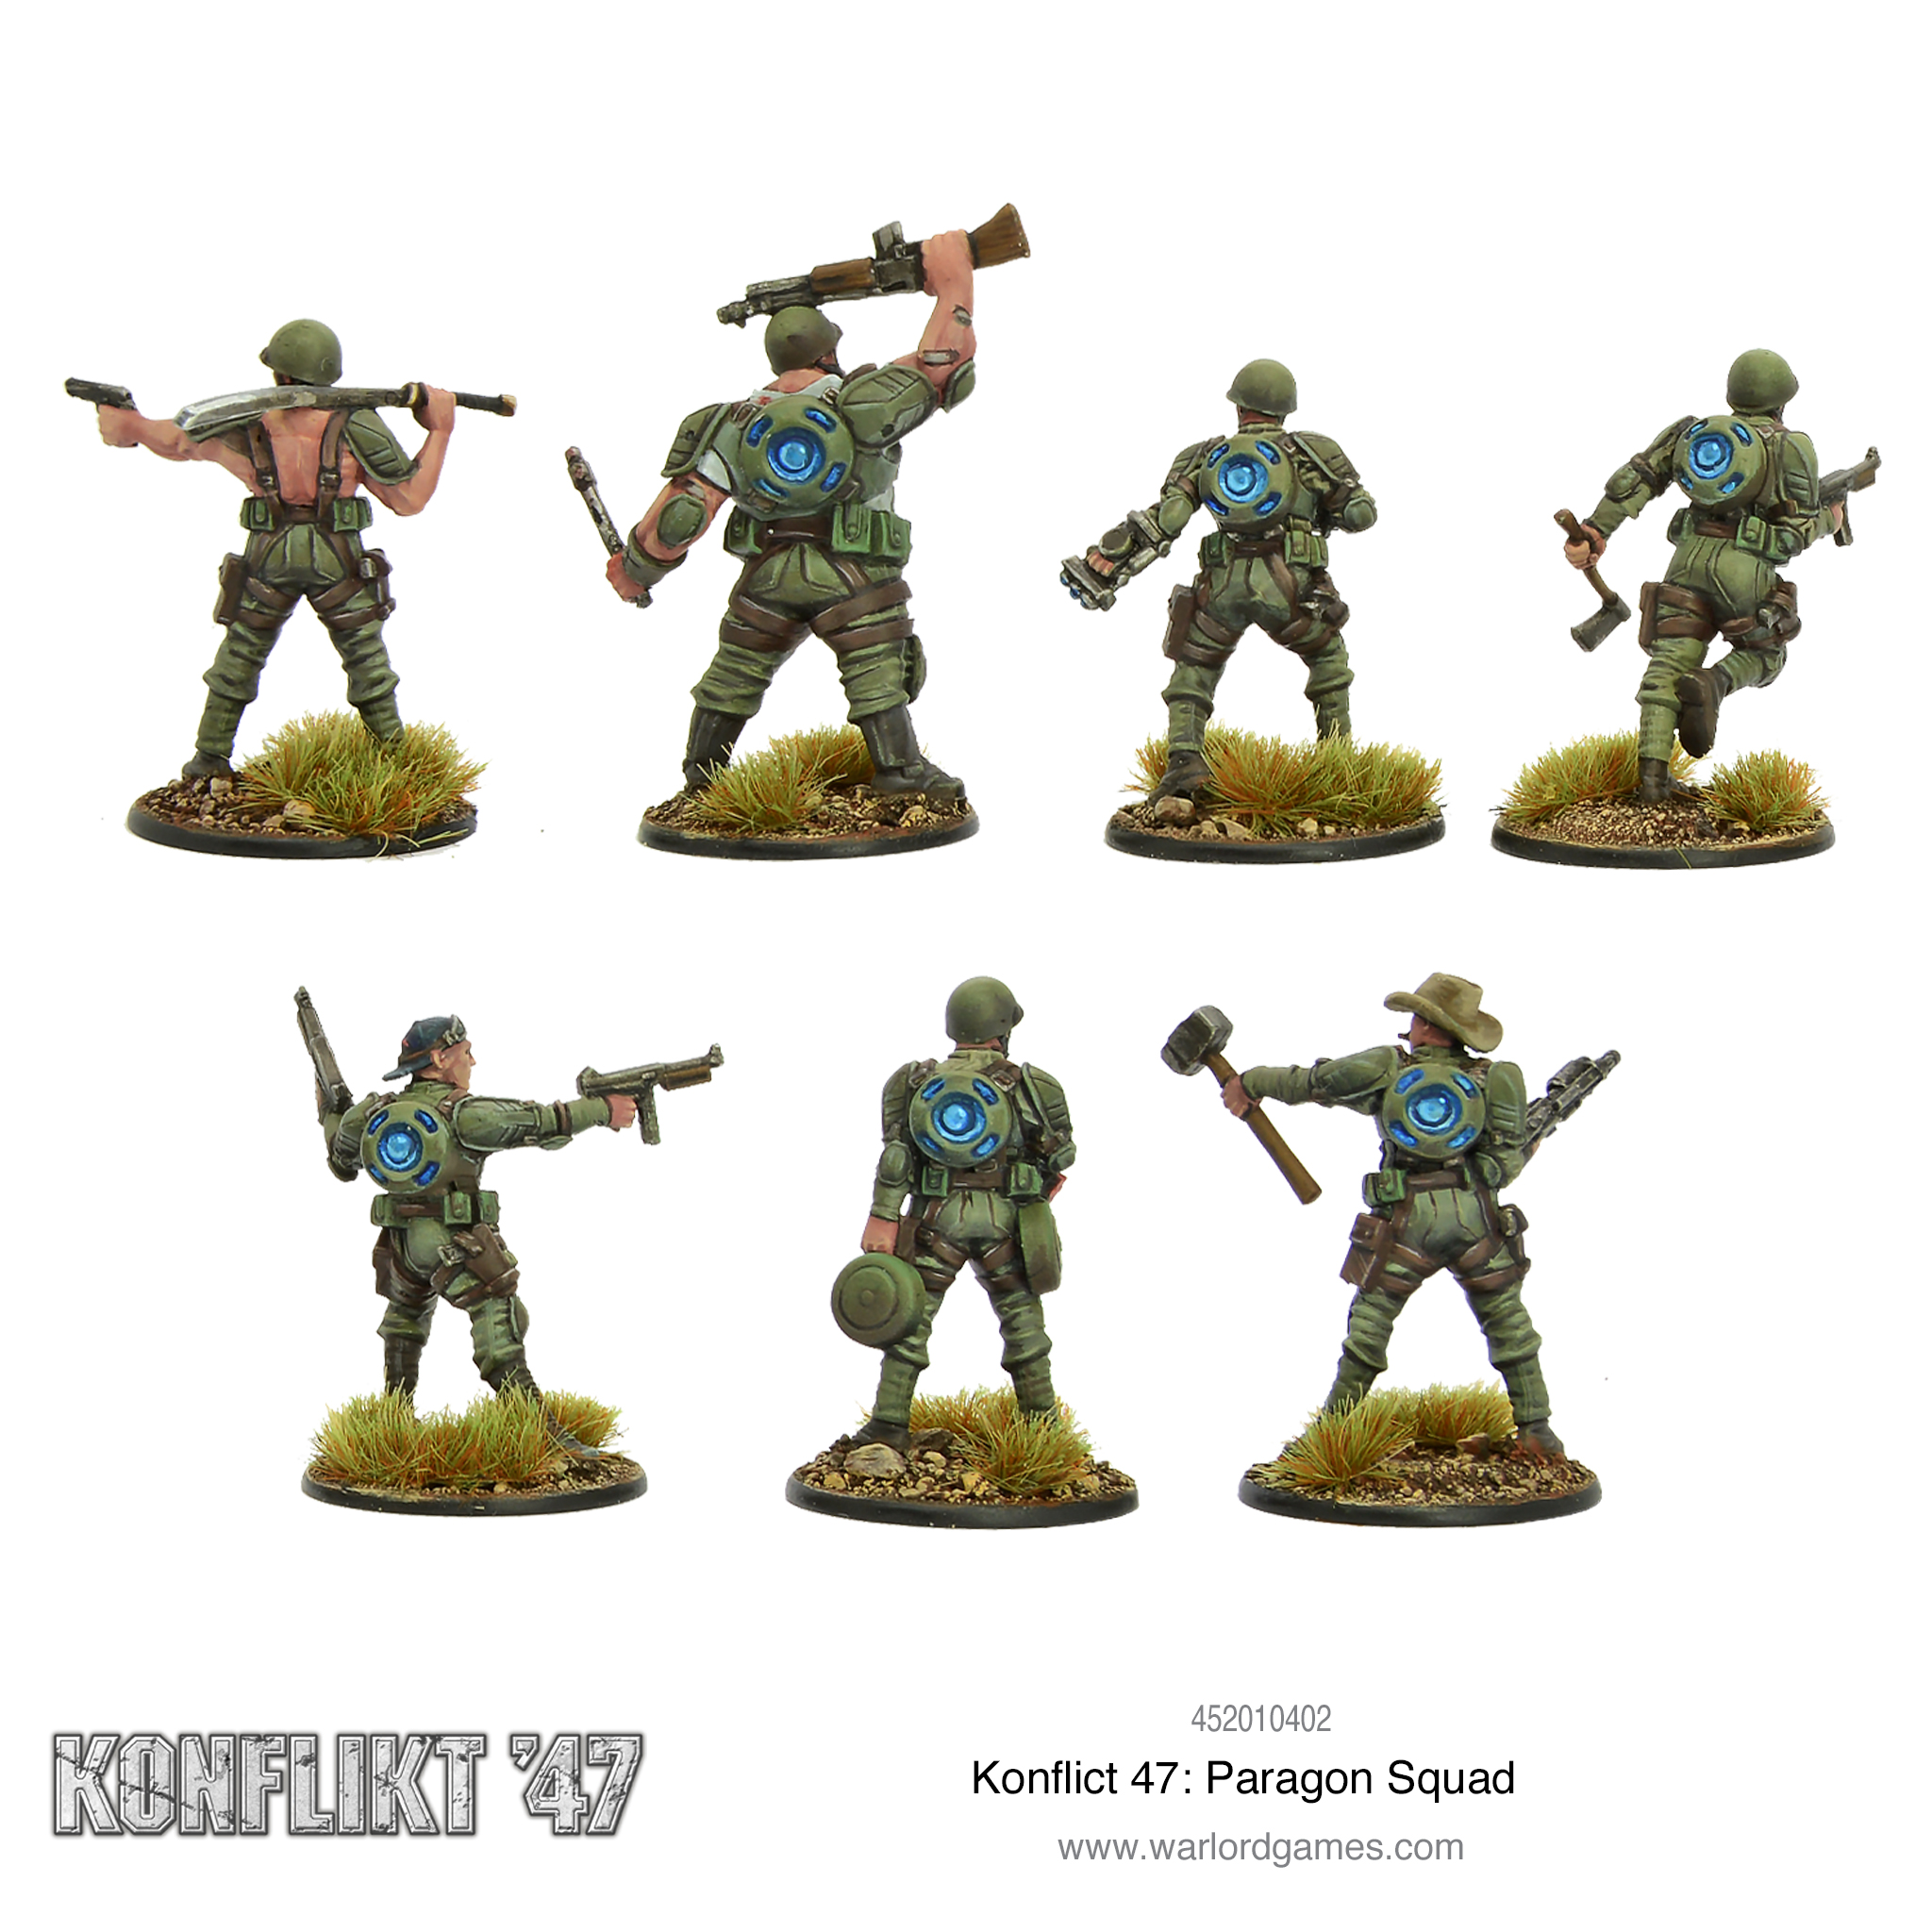 Konflikt' 47 Paragon Squad Rear View